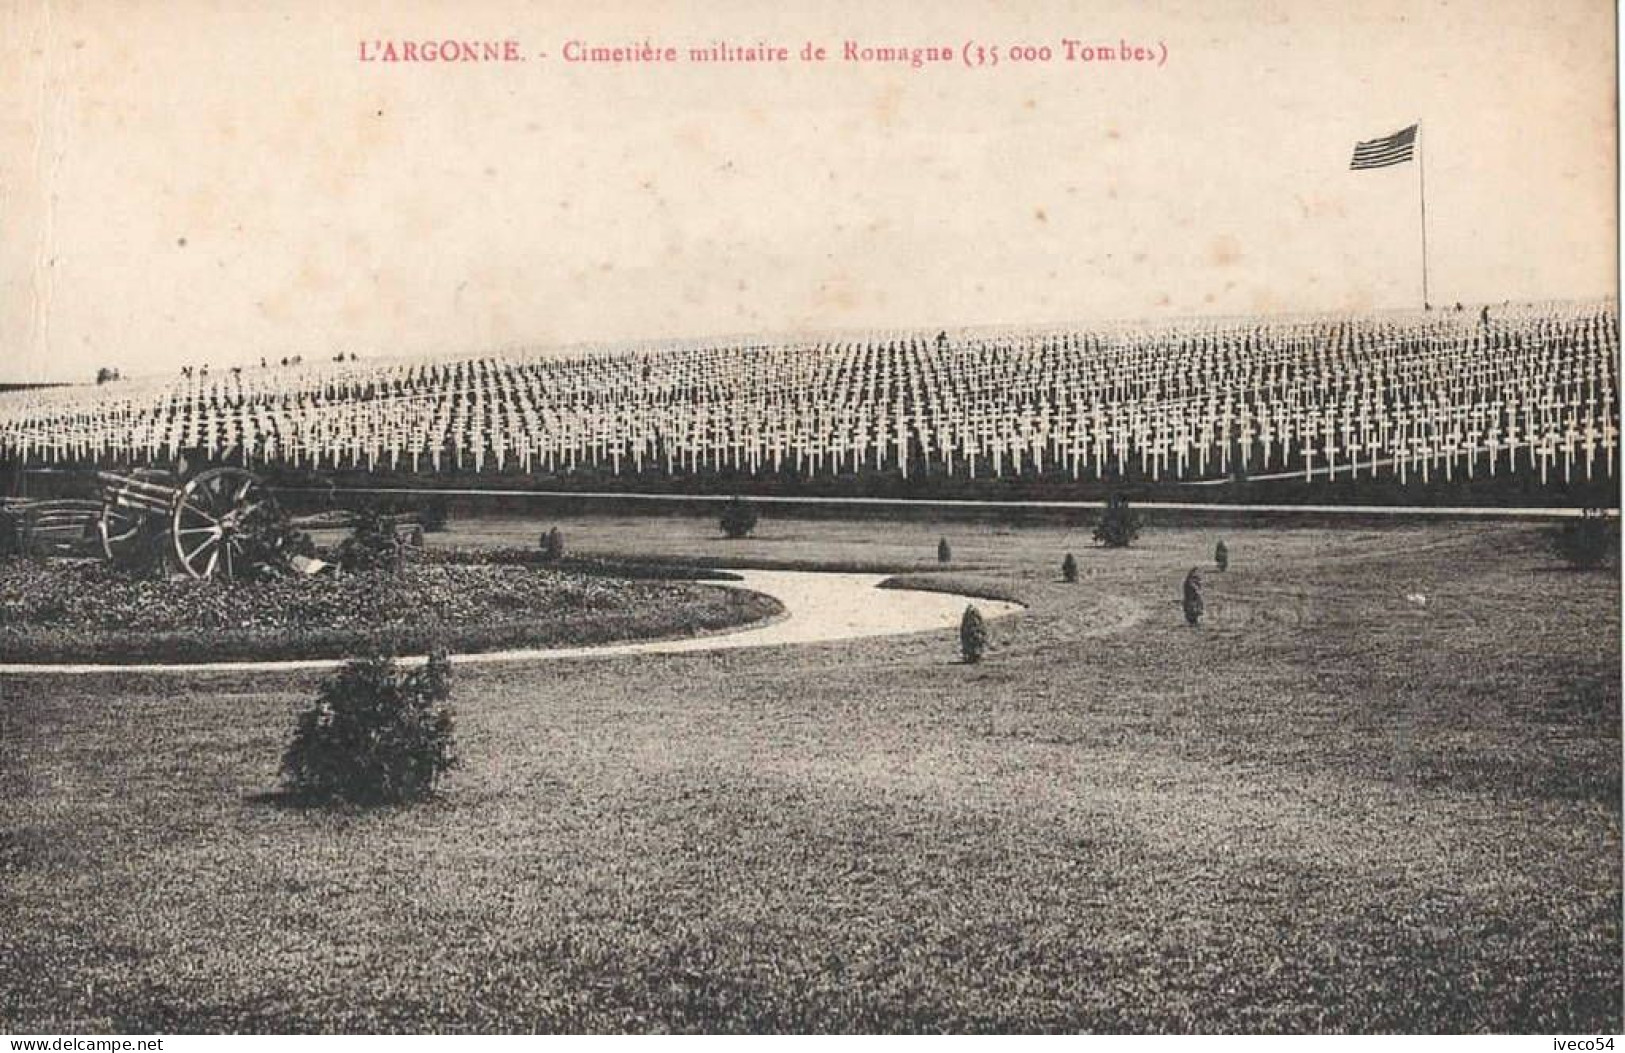 Meuse  / Argonne  Cimetière Militaire Américain     Romagne S/s Montfaucon   ( 35000  Tombes ) - Cimiteri Militari